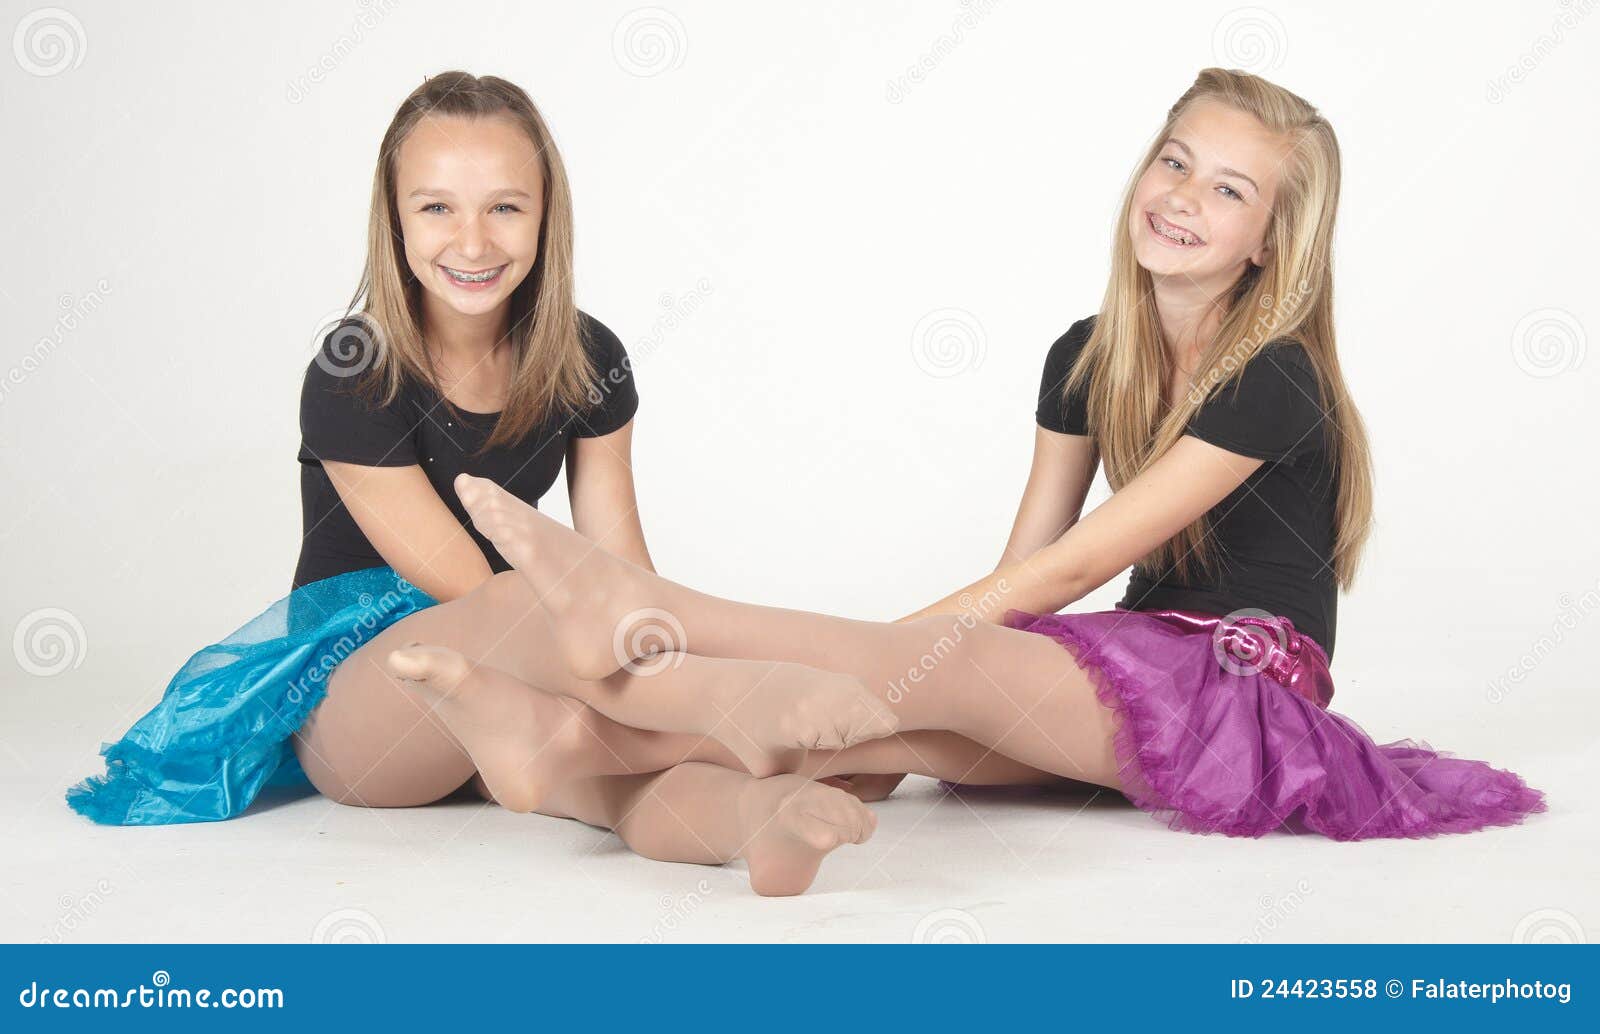 Teenage Girls In Stockings